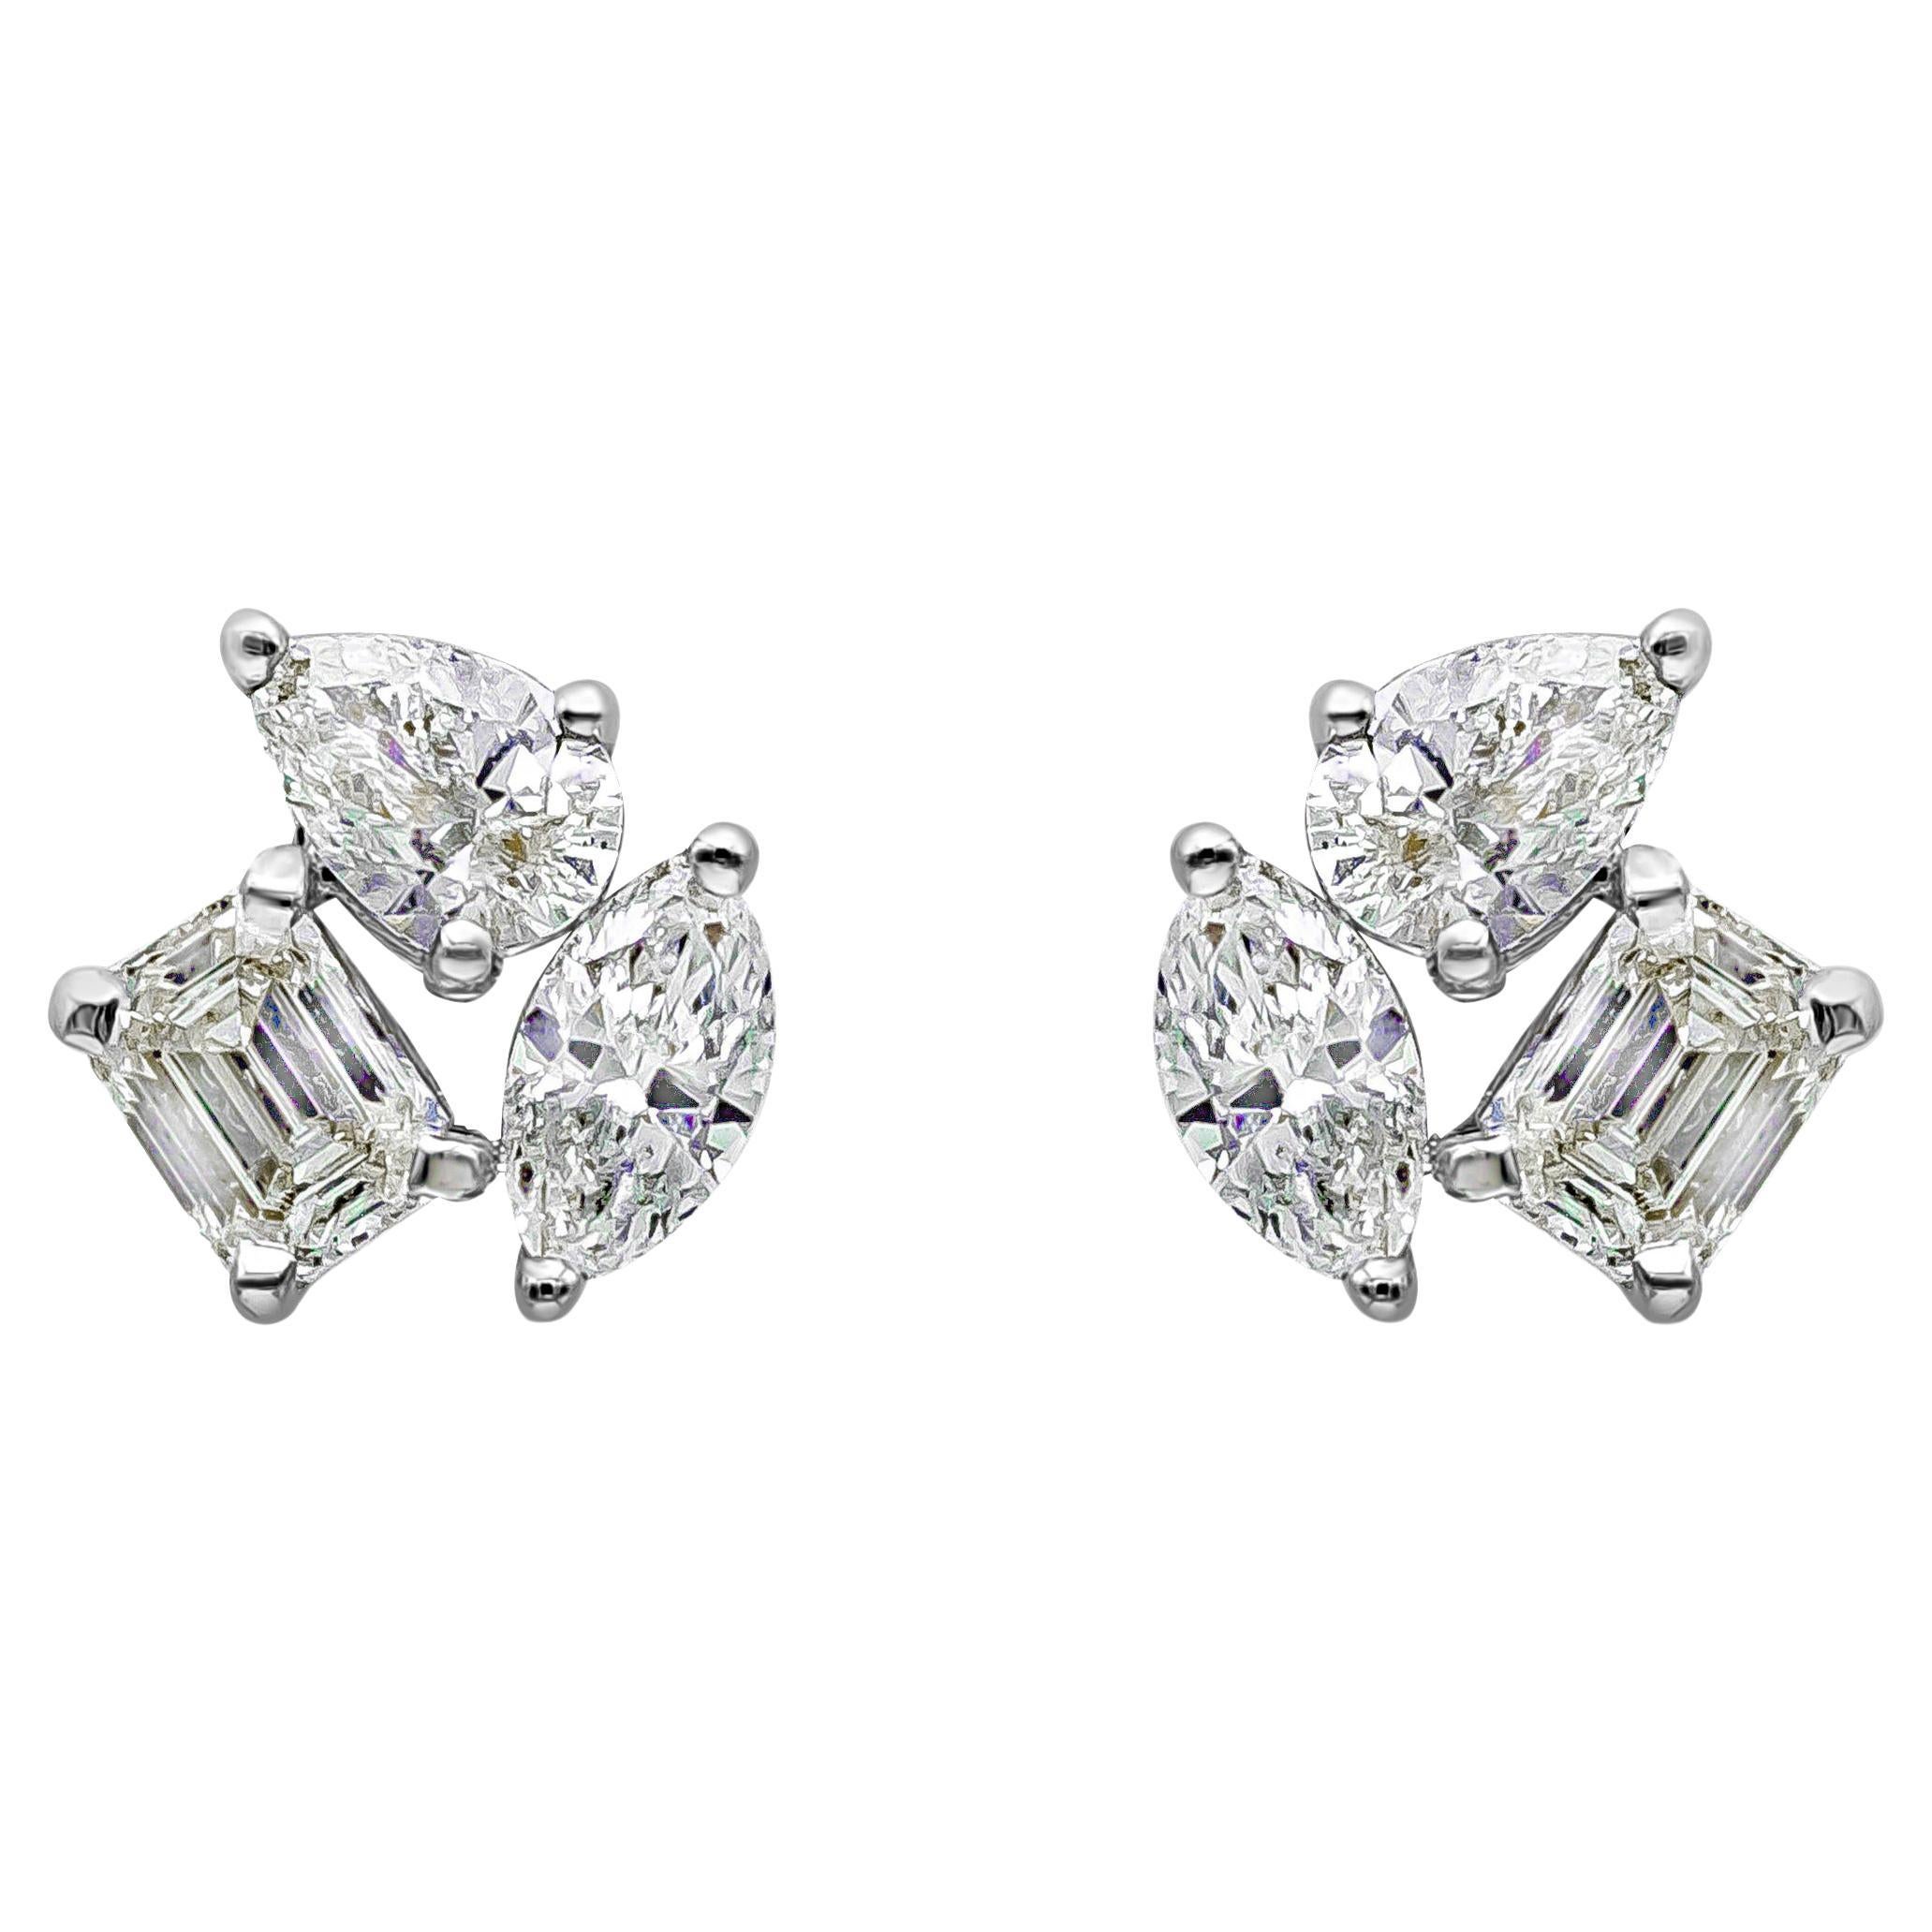 Roman Malakov 1.16 Carat Total Mixed Cut Diamond Three Stone Stud Earrings